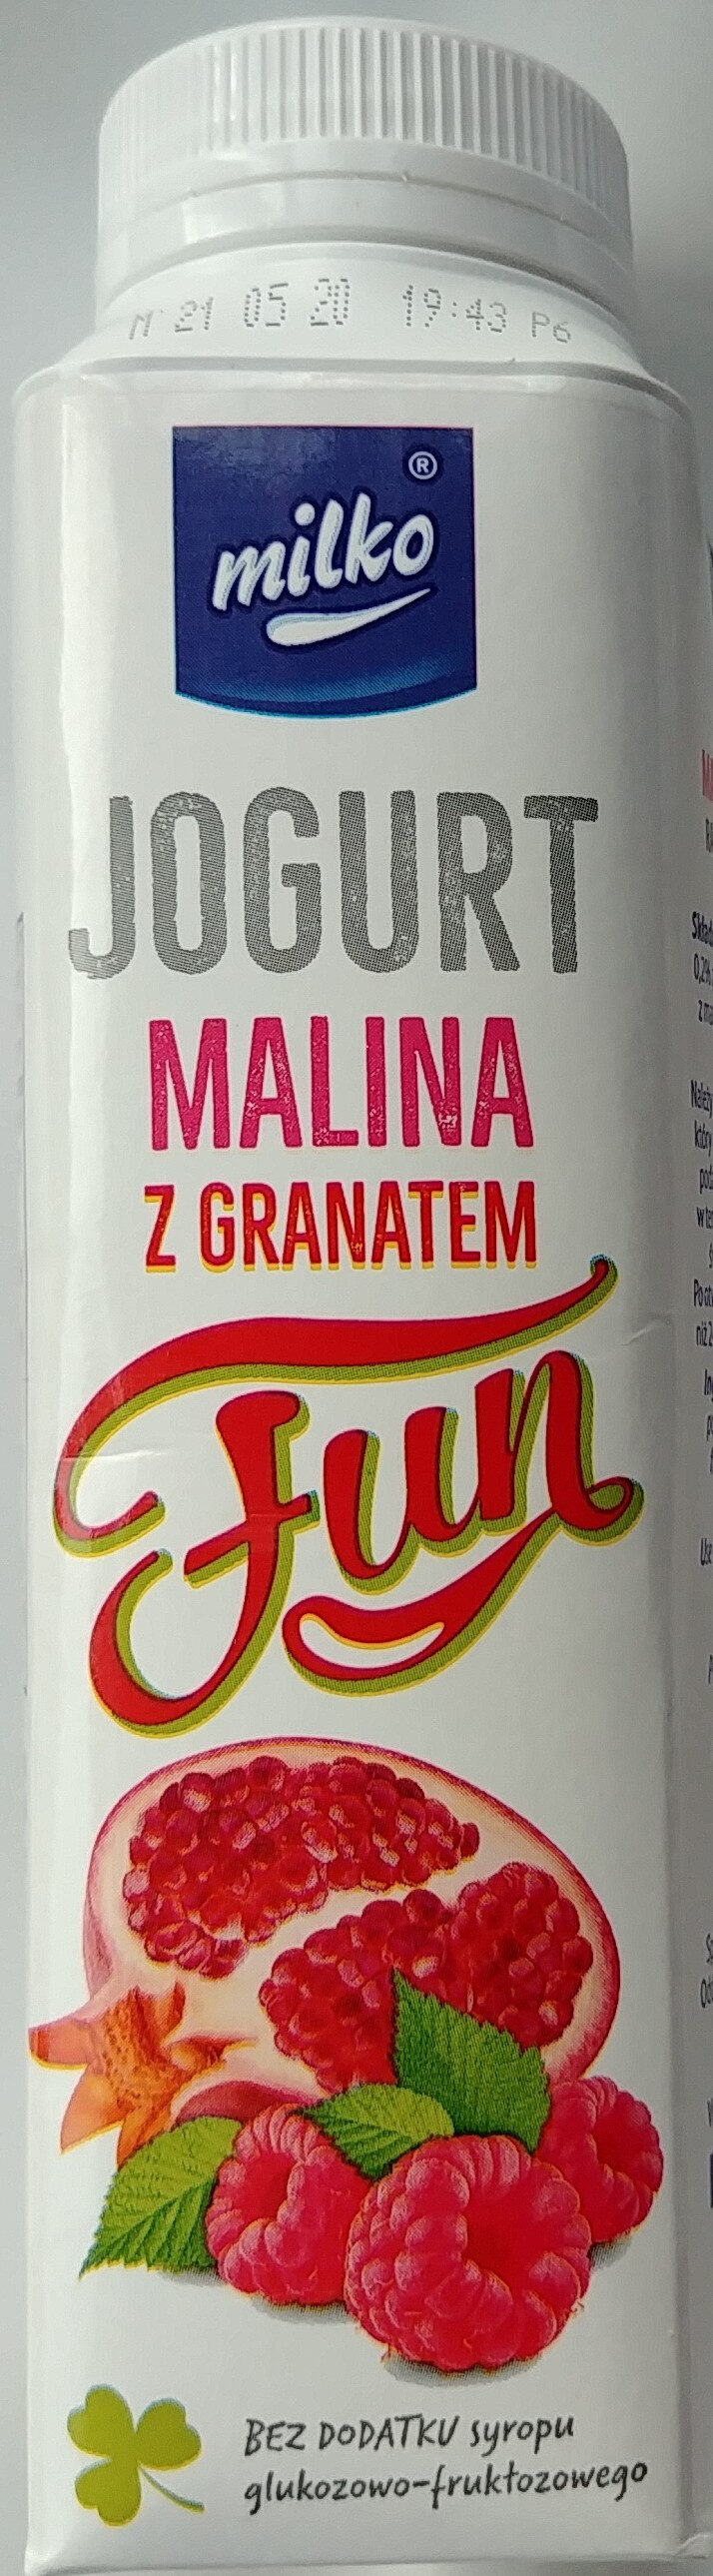 Jogurt malina z granatem - Product - pl